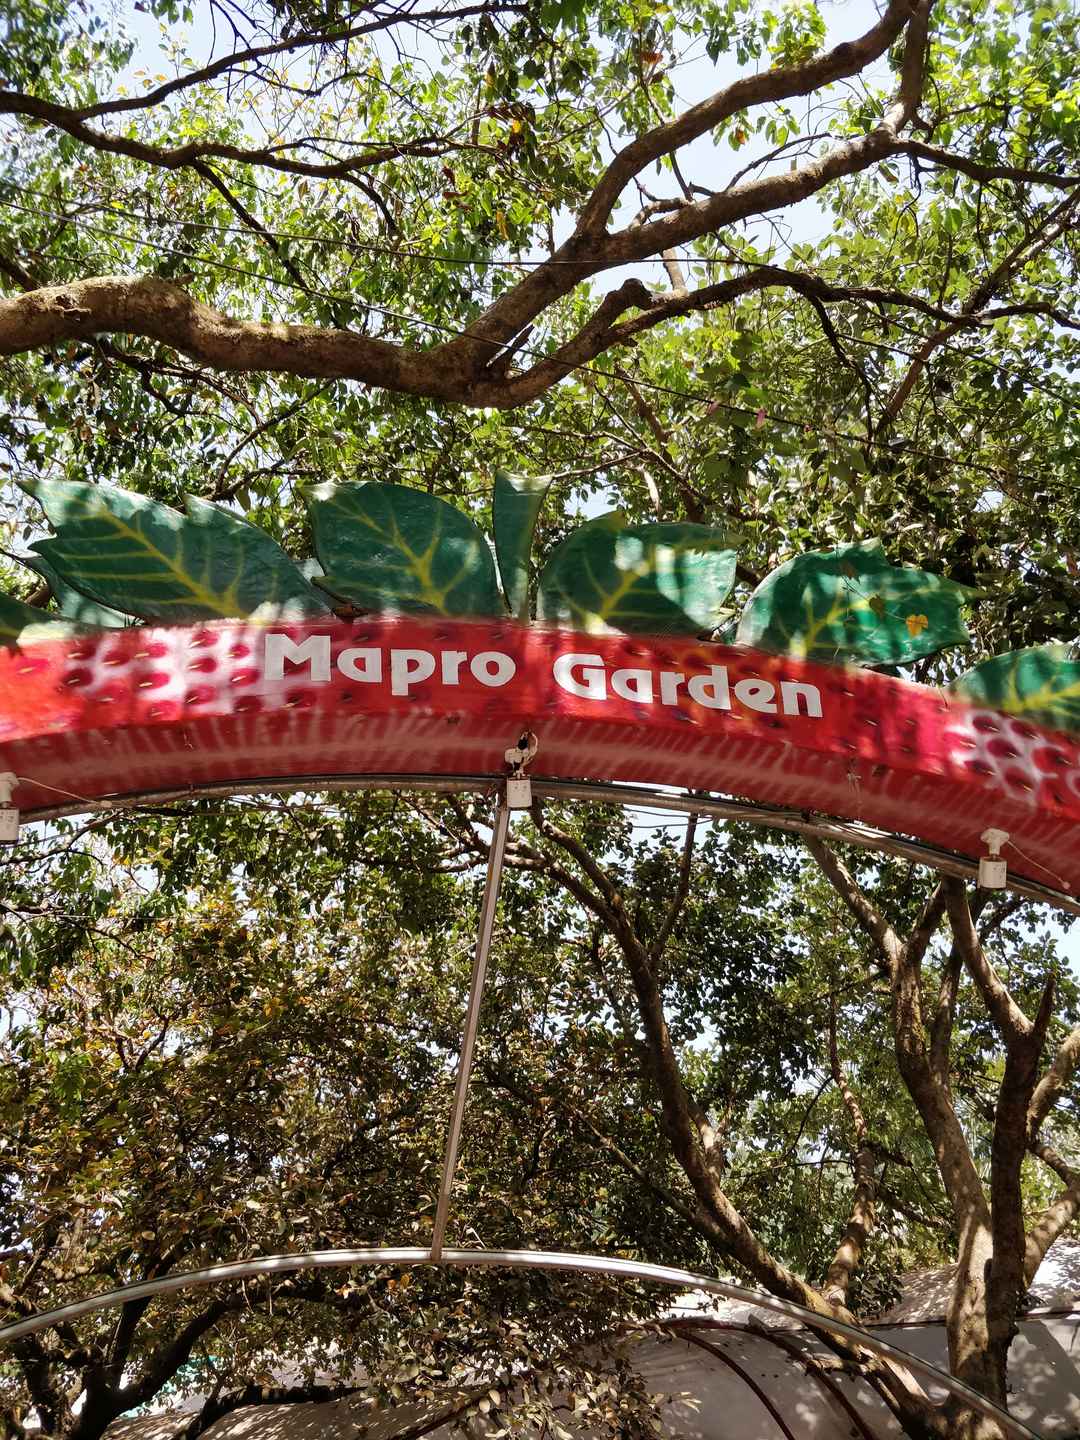 Mapro Garden Mahabaleshwar India View Images Timing And Reviews Tripoto